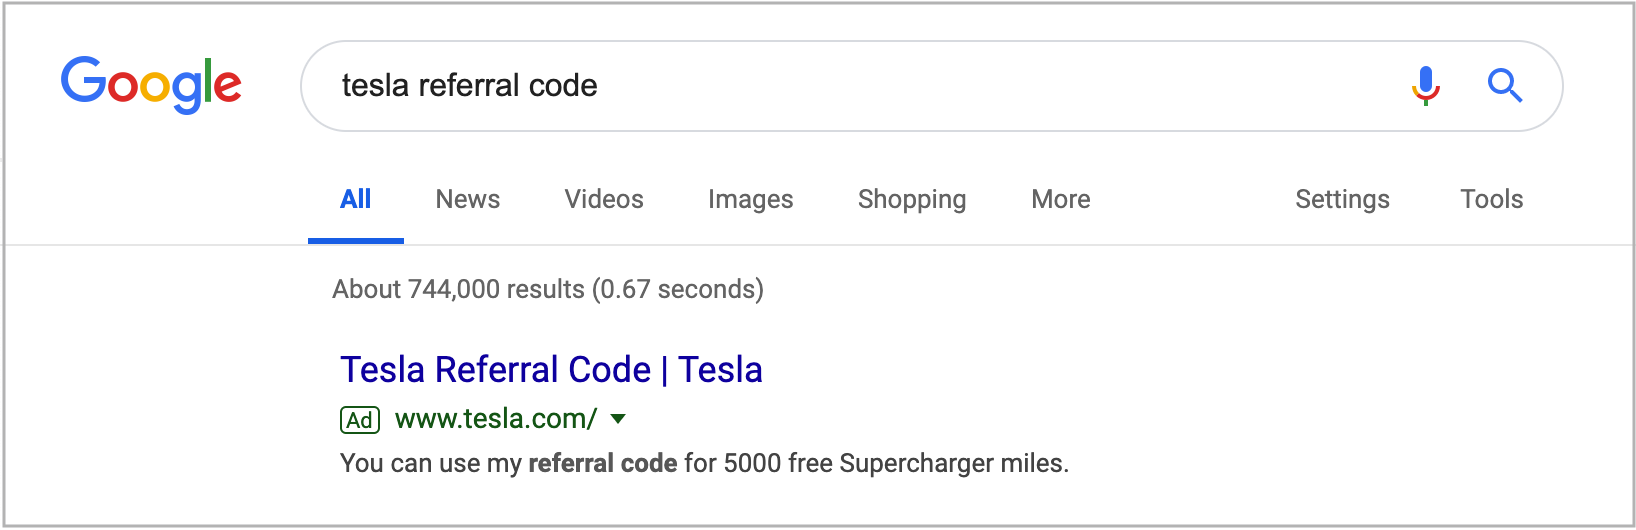 Tesla referral code ad example